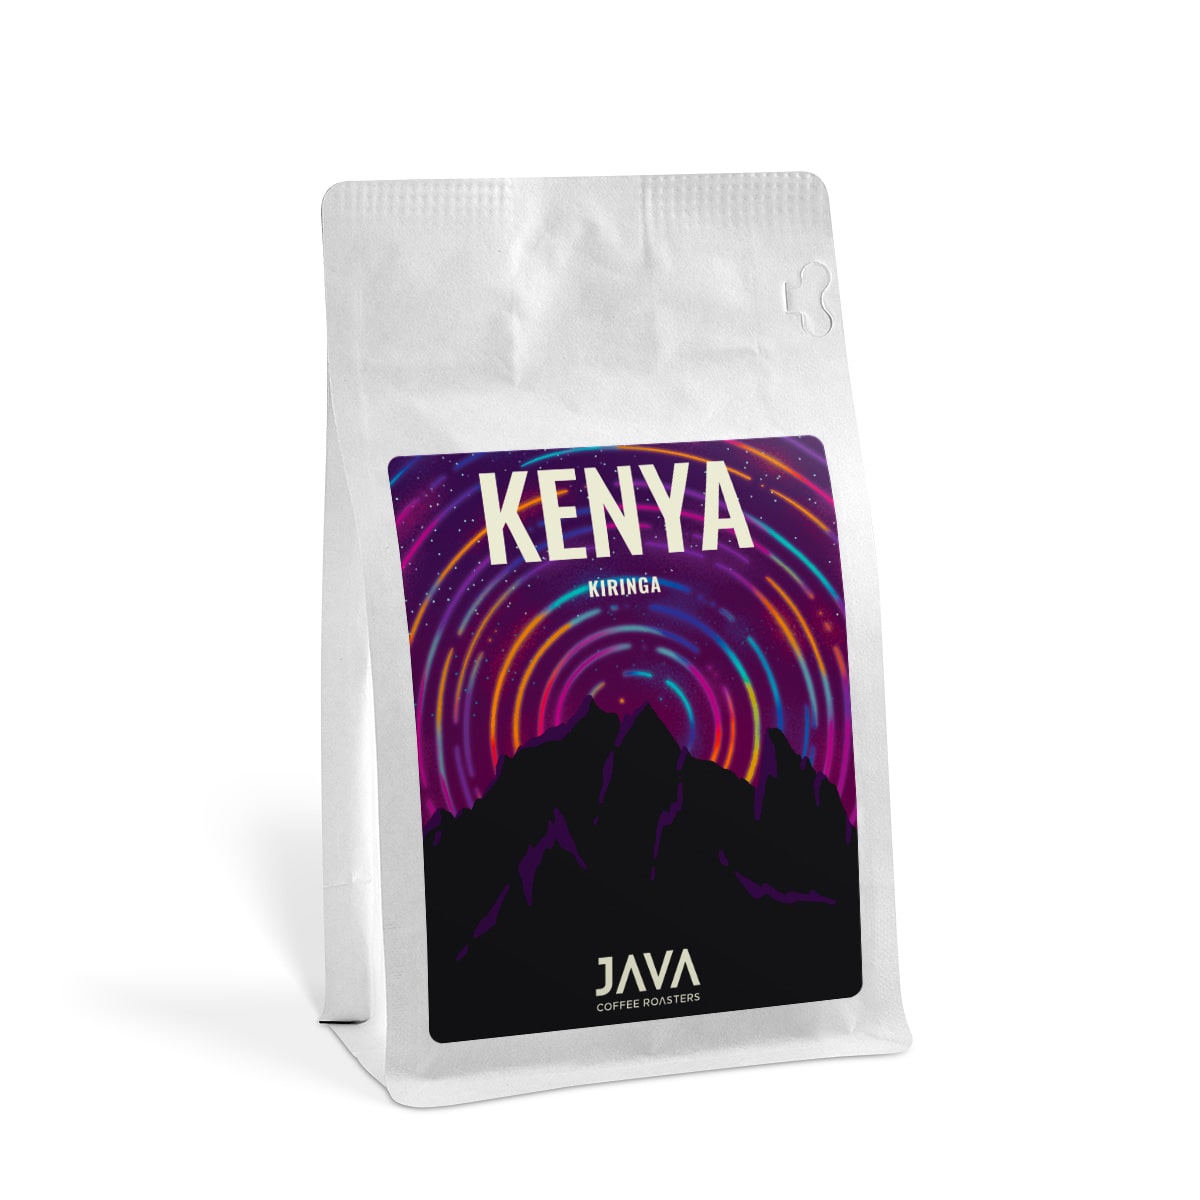 Kawa Kenya Kiringa 250g